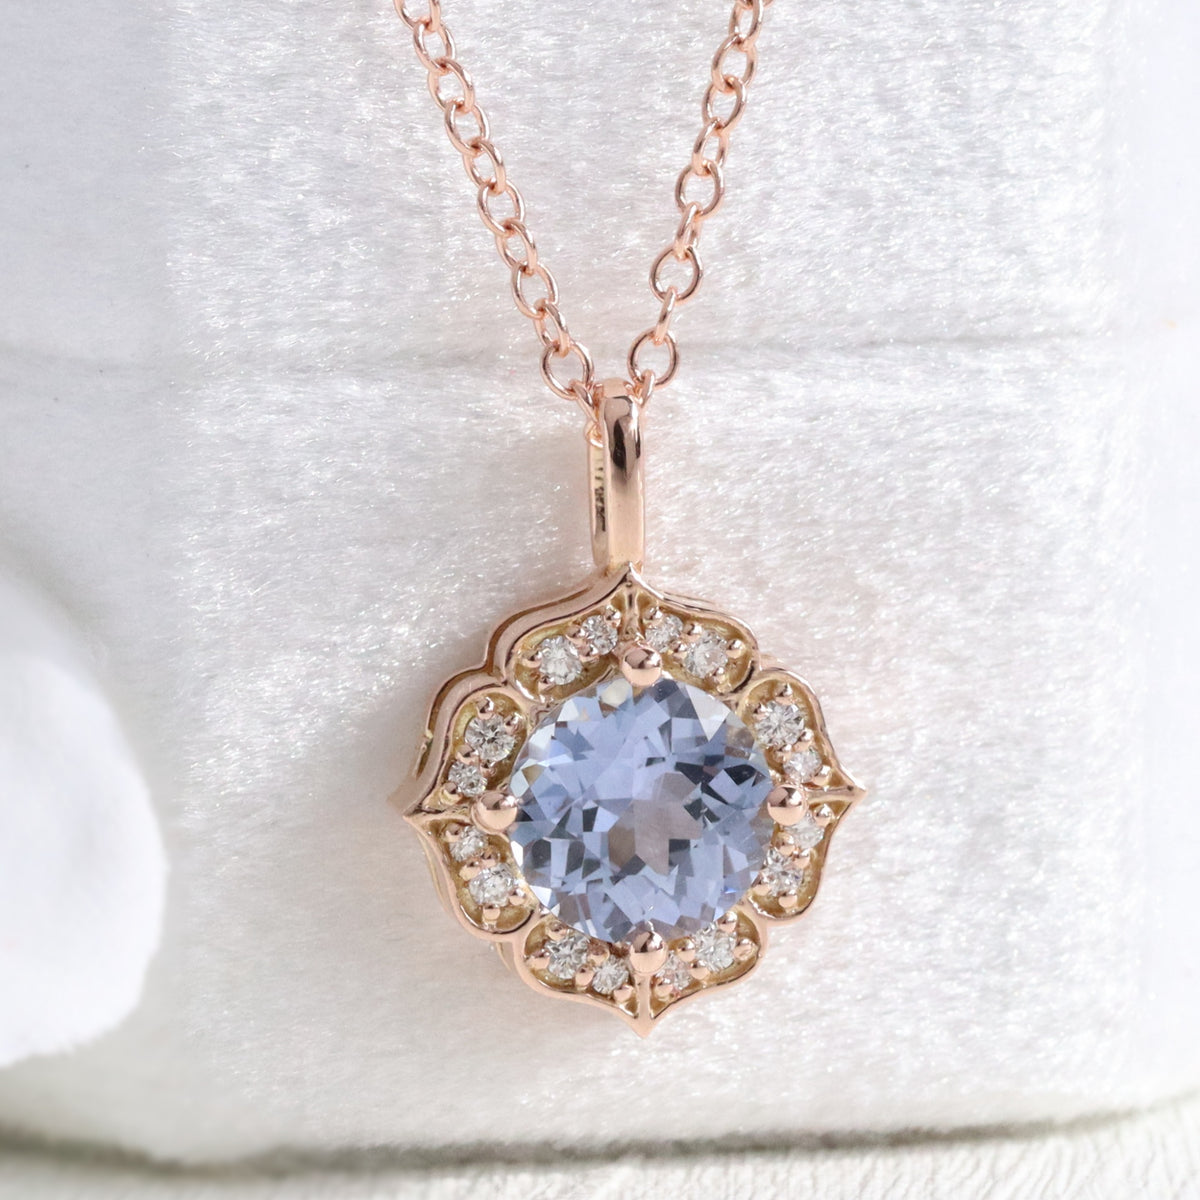 Lavender sapphire necklace rose gold vintage floral diamond and sapphire pendant la more design jewelry